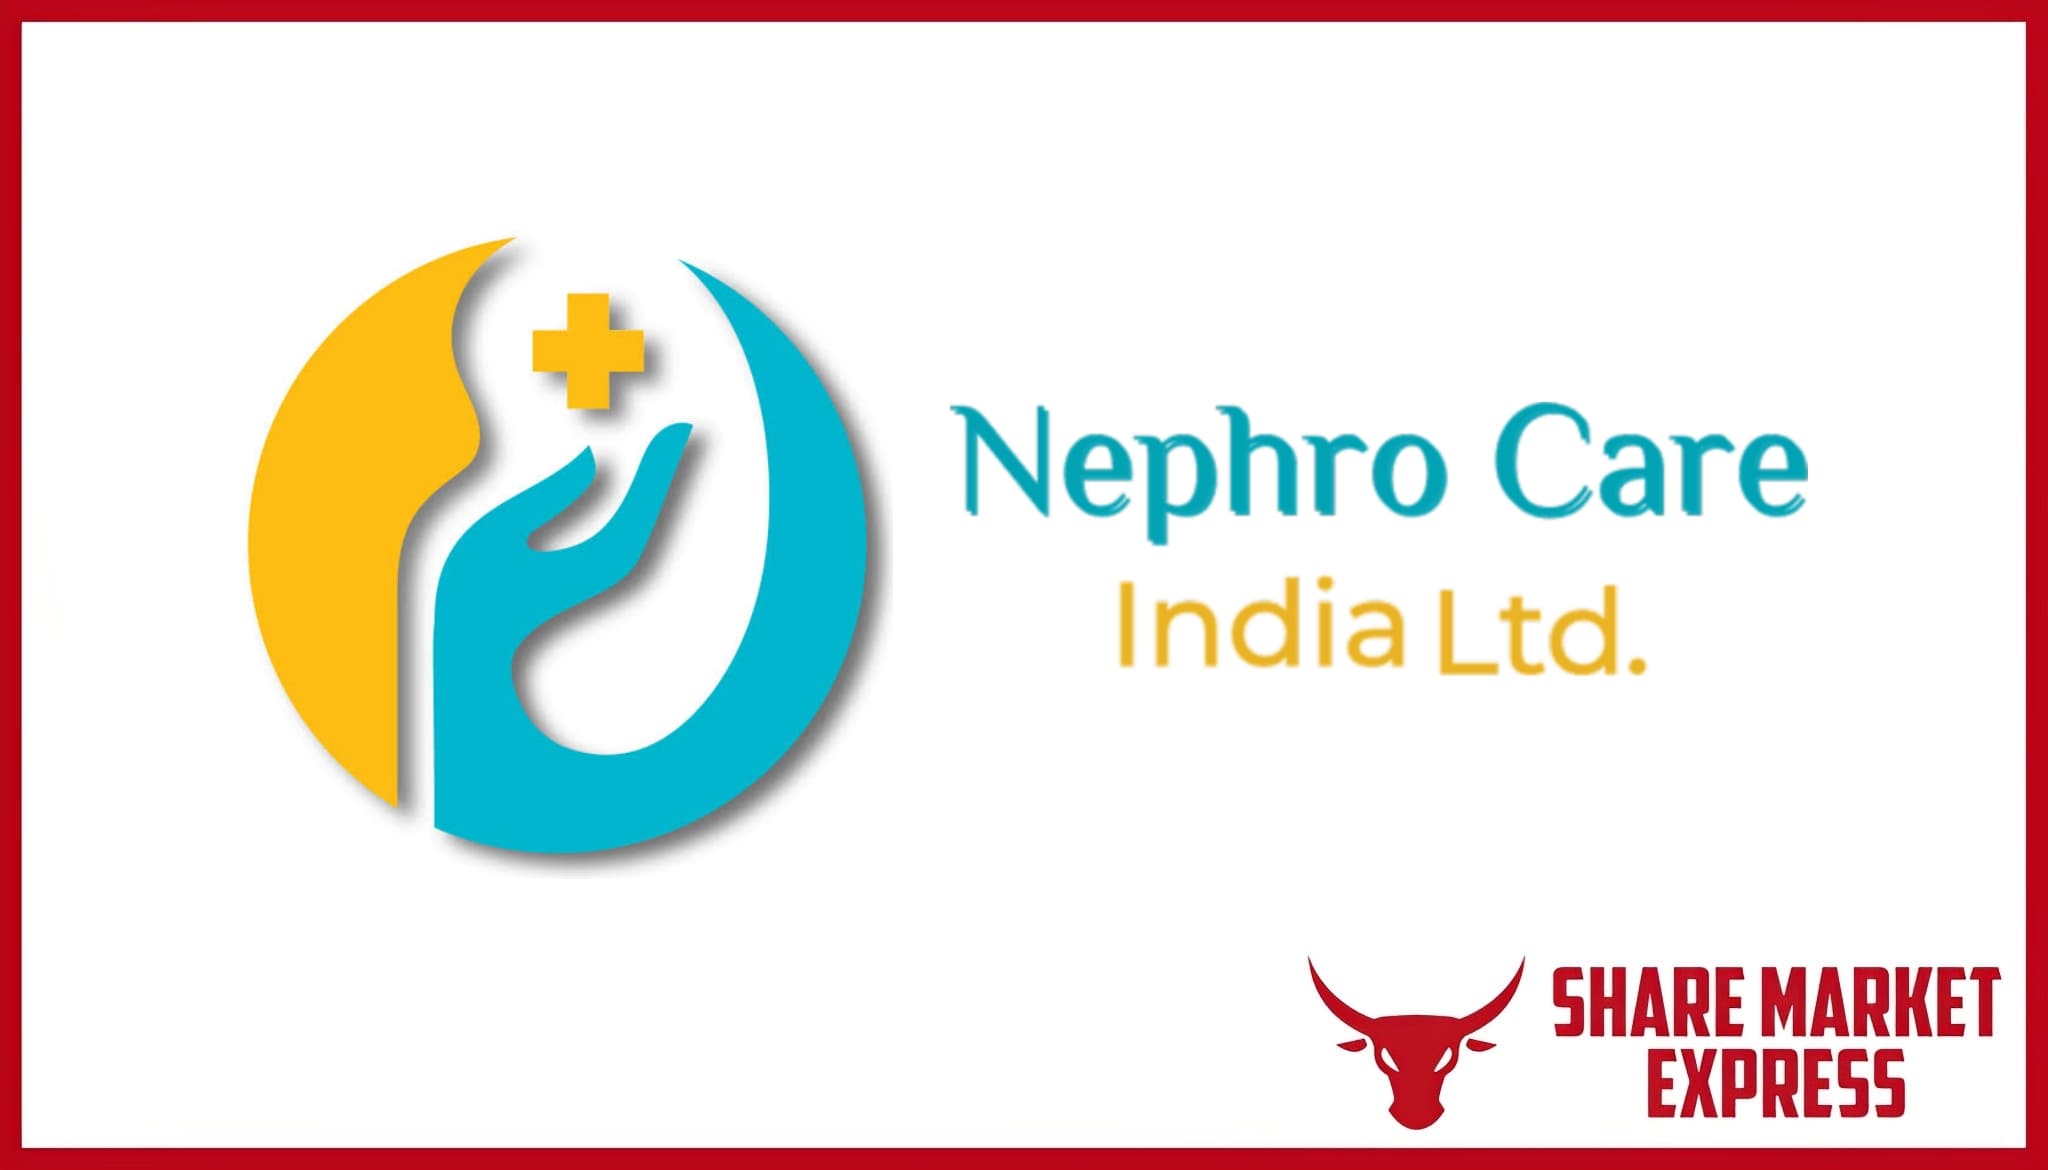 Nephro Care IPO